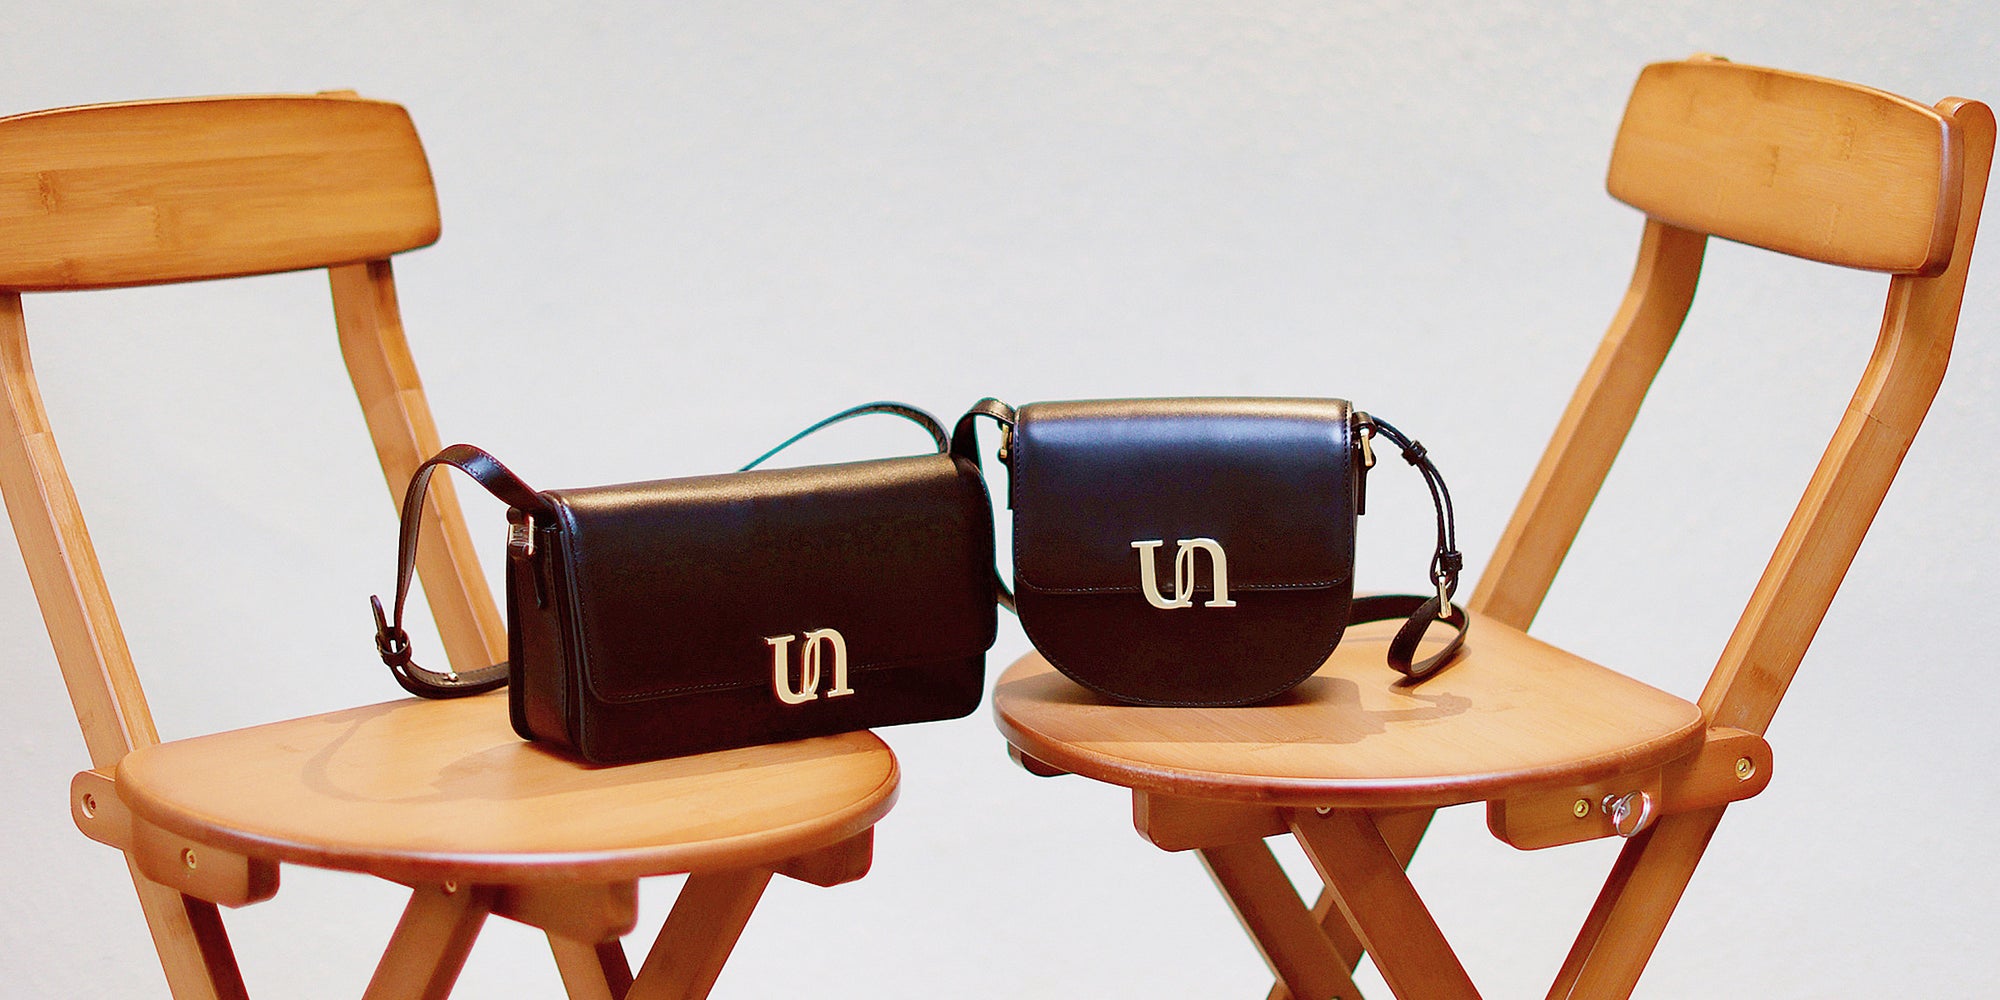 Unitude - Bambi Crossbody Bag - Chocolate Brown 📷@ anneorion  ht.ly/utv030rVipL